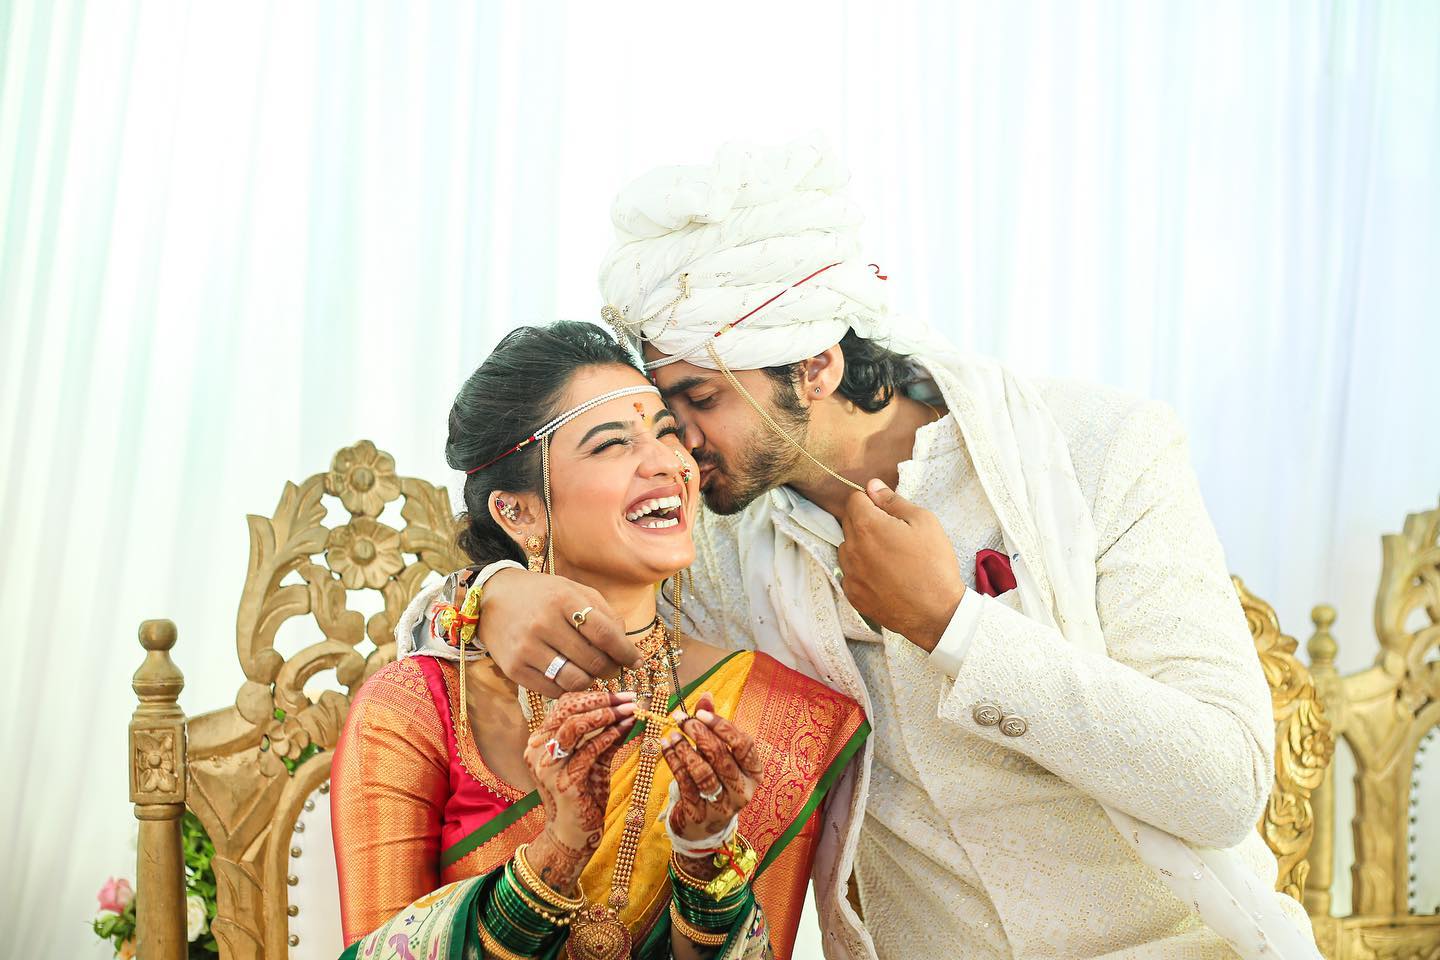 Hruta Durgule Prateek Shah wedding reception photos (15)